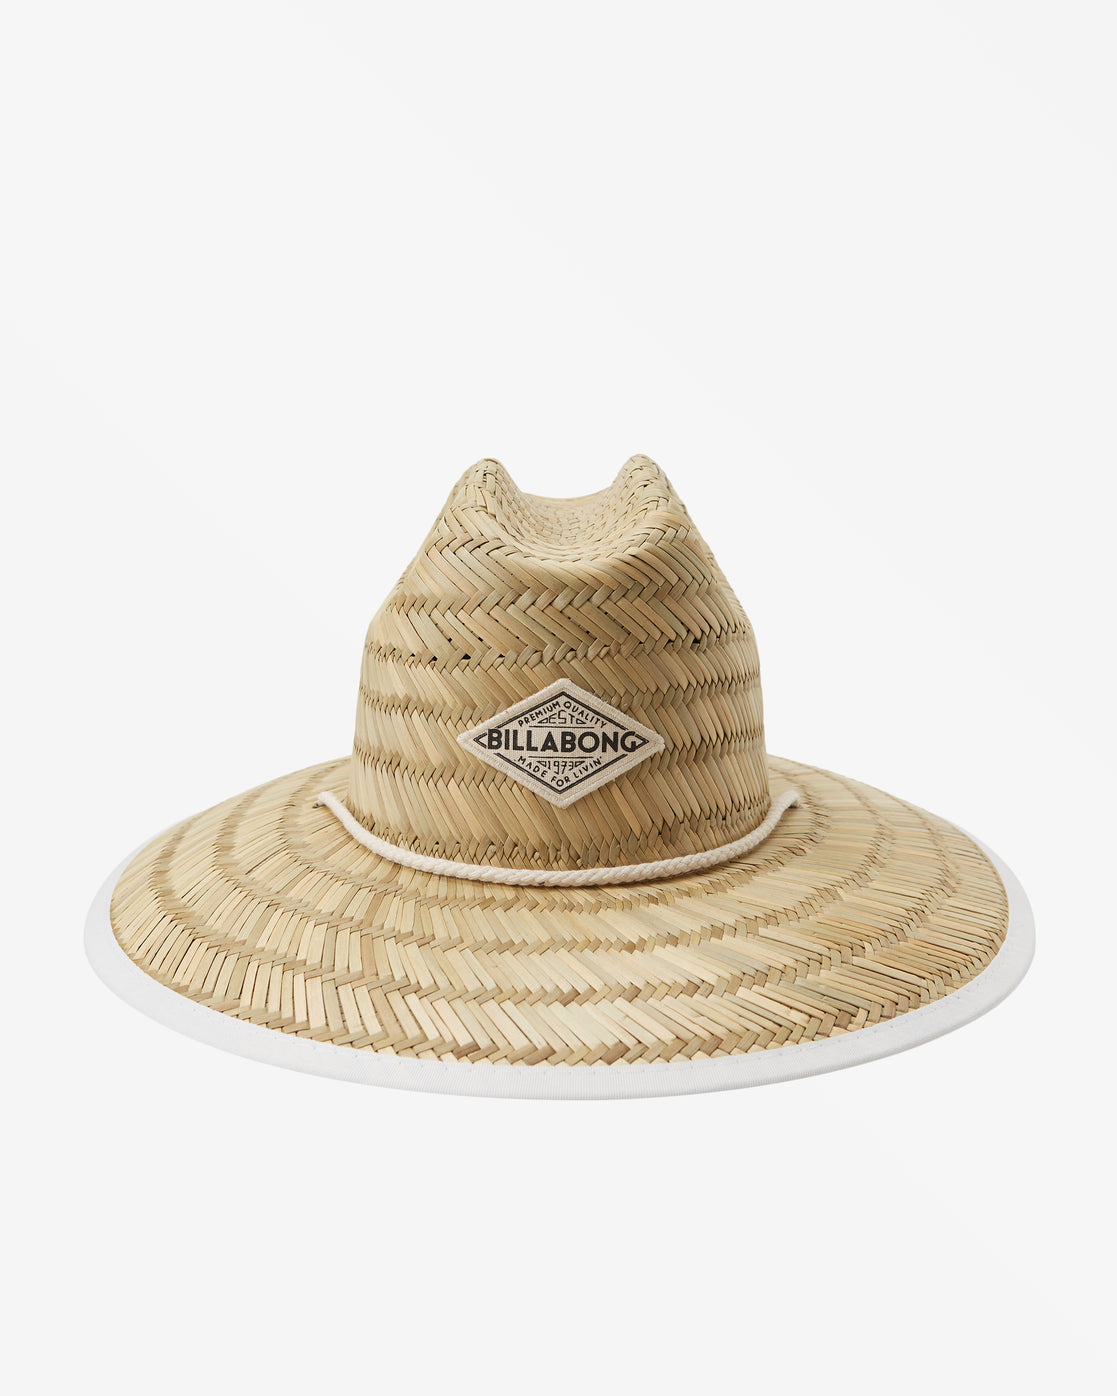 Tipton Lifeguard Hat The Bikini Shoppe